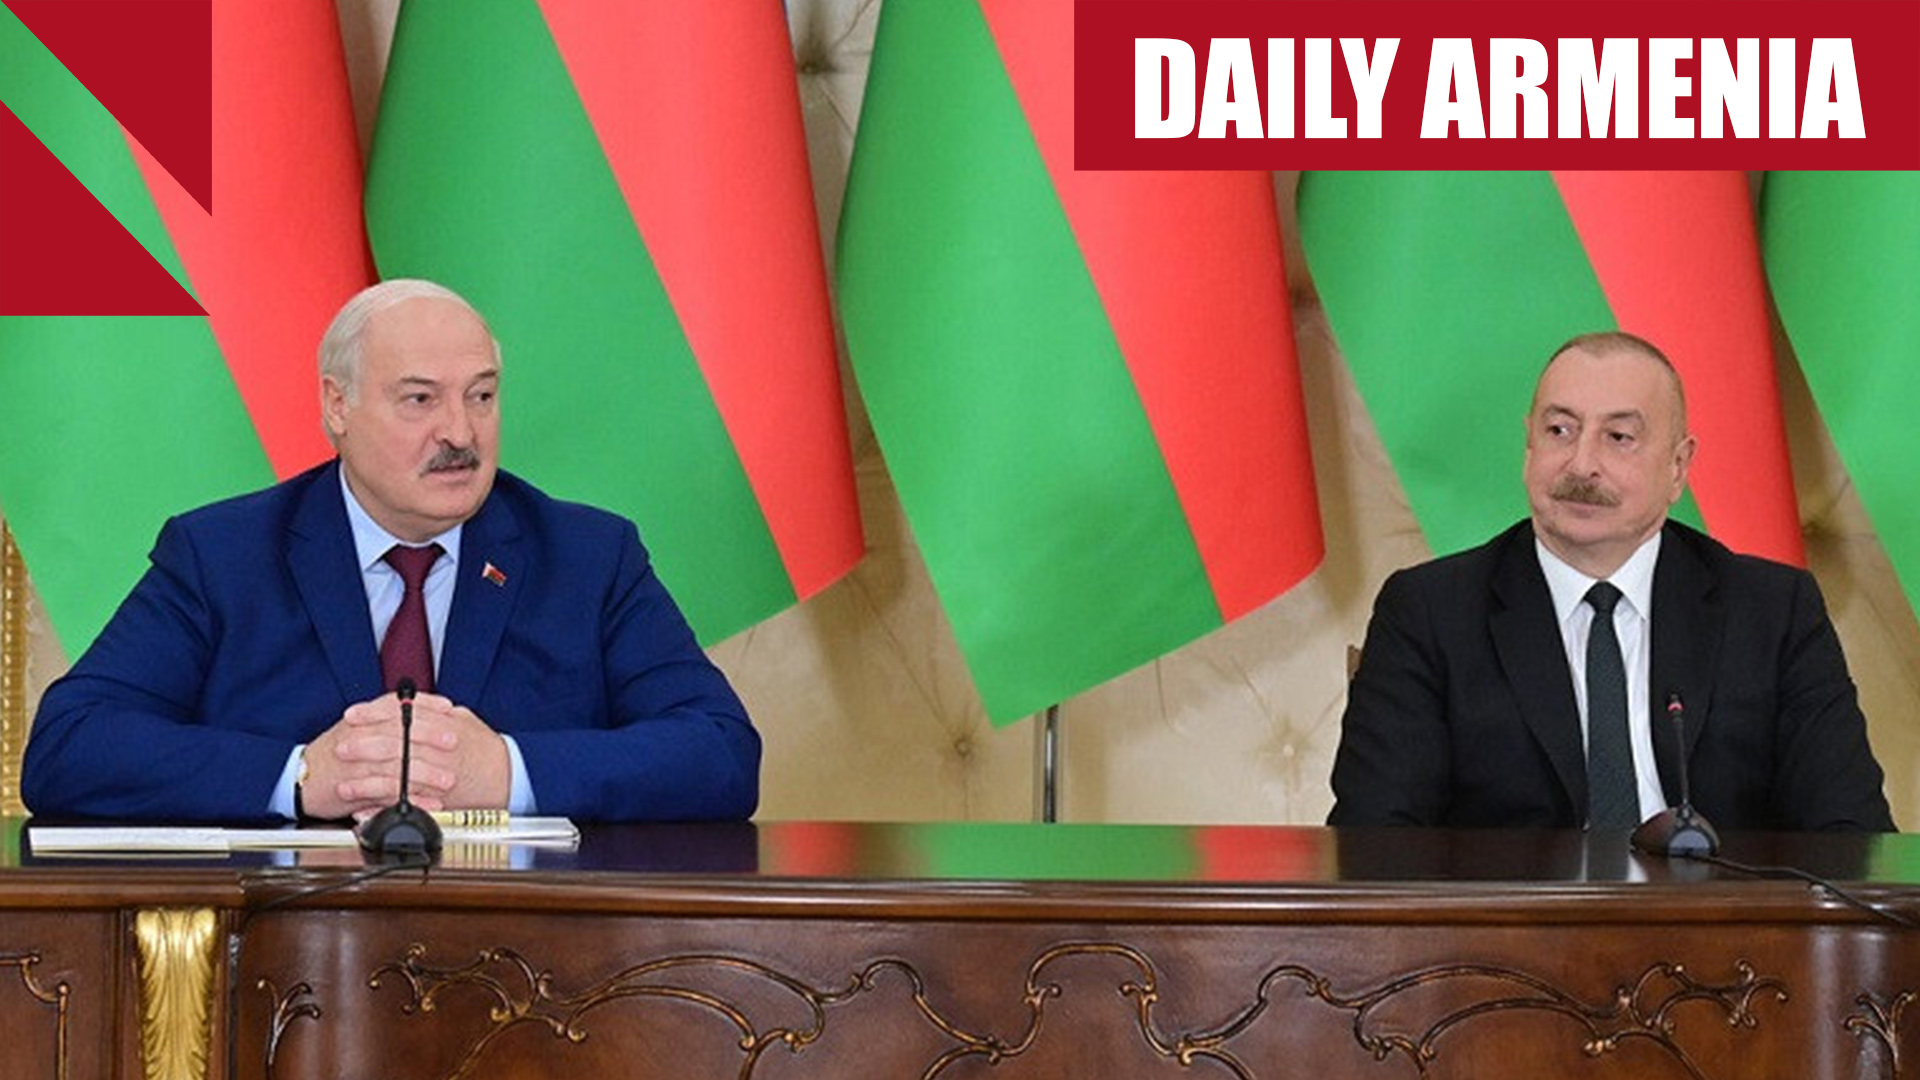 Belarus armed Azerbaijan for war against Armenia, POLITICO reports